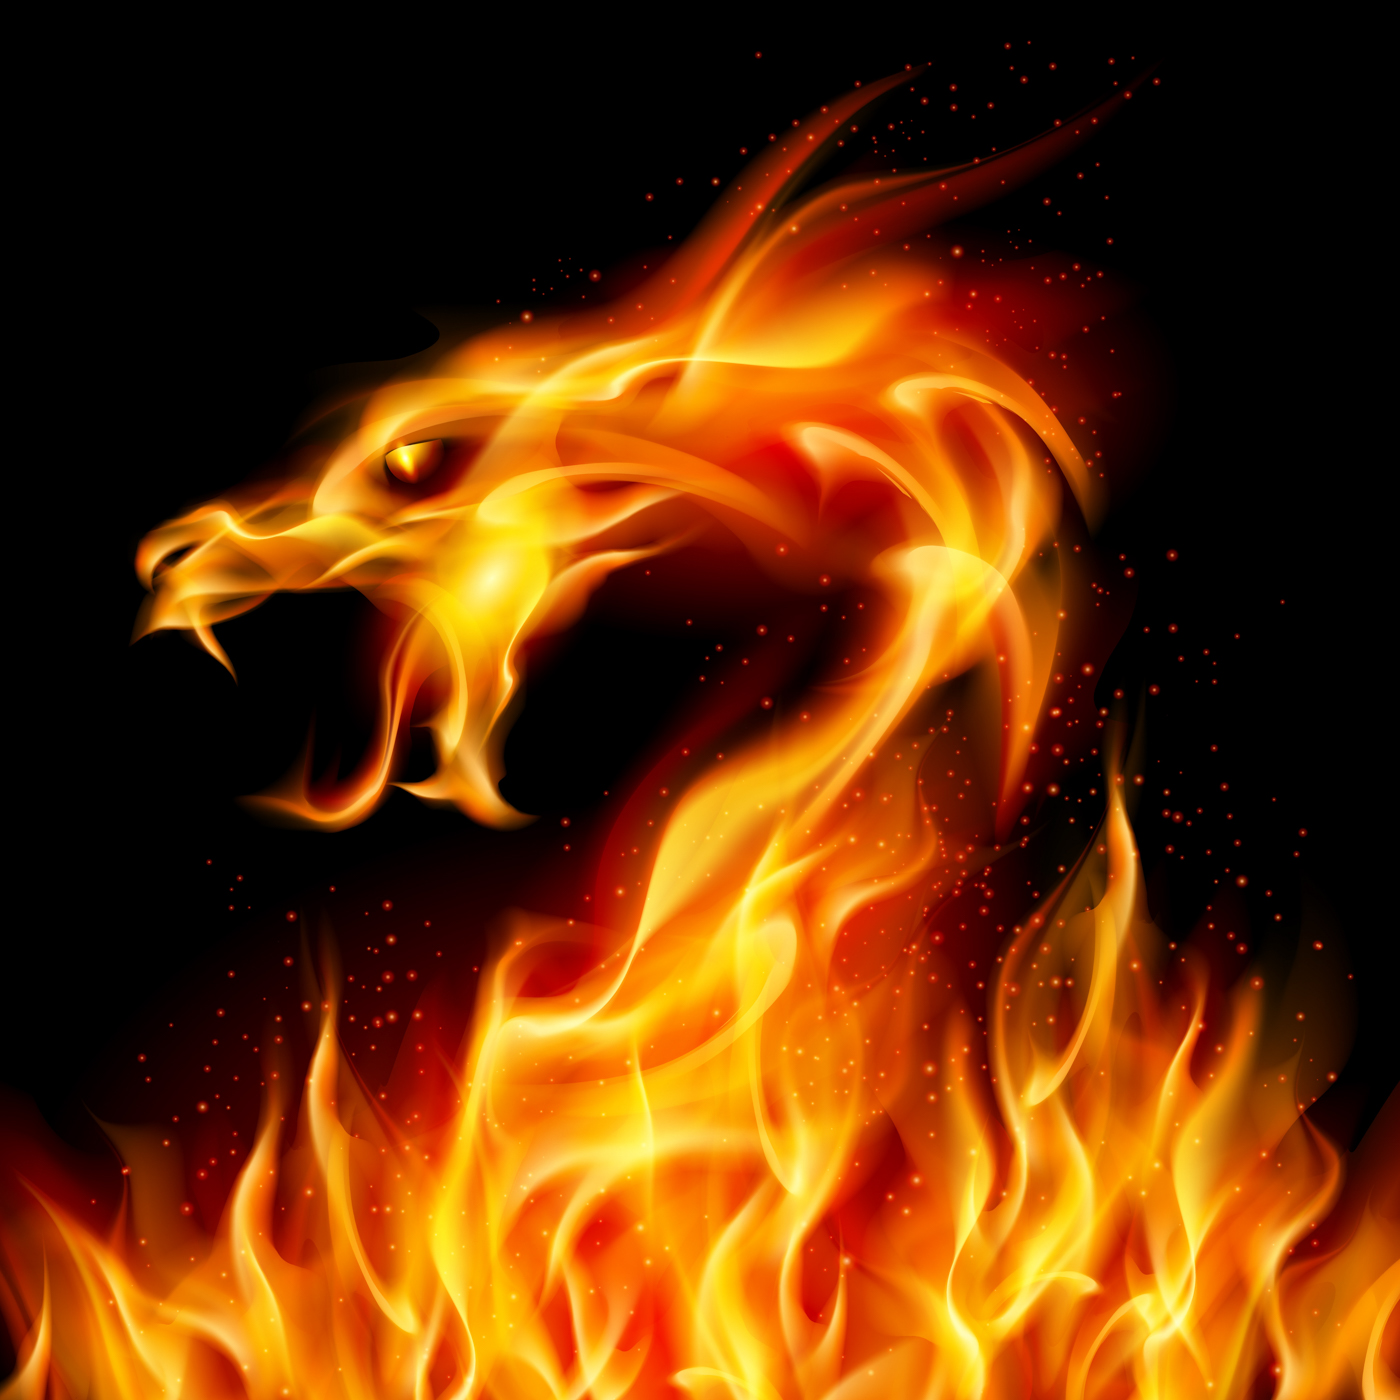 Fire Dragon on Black background